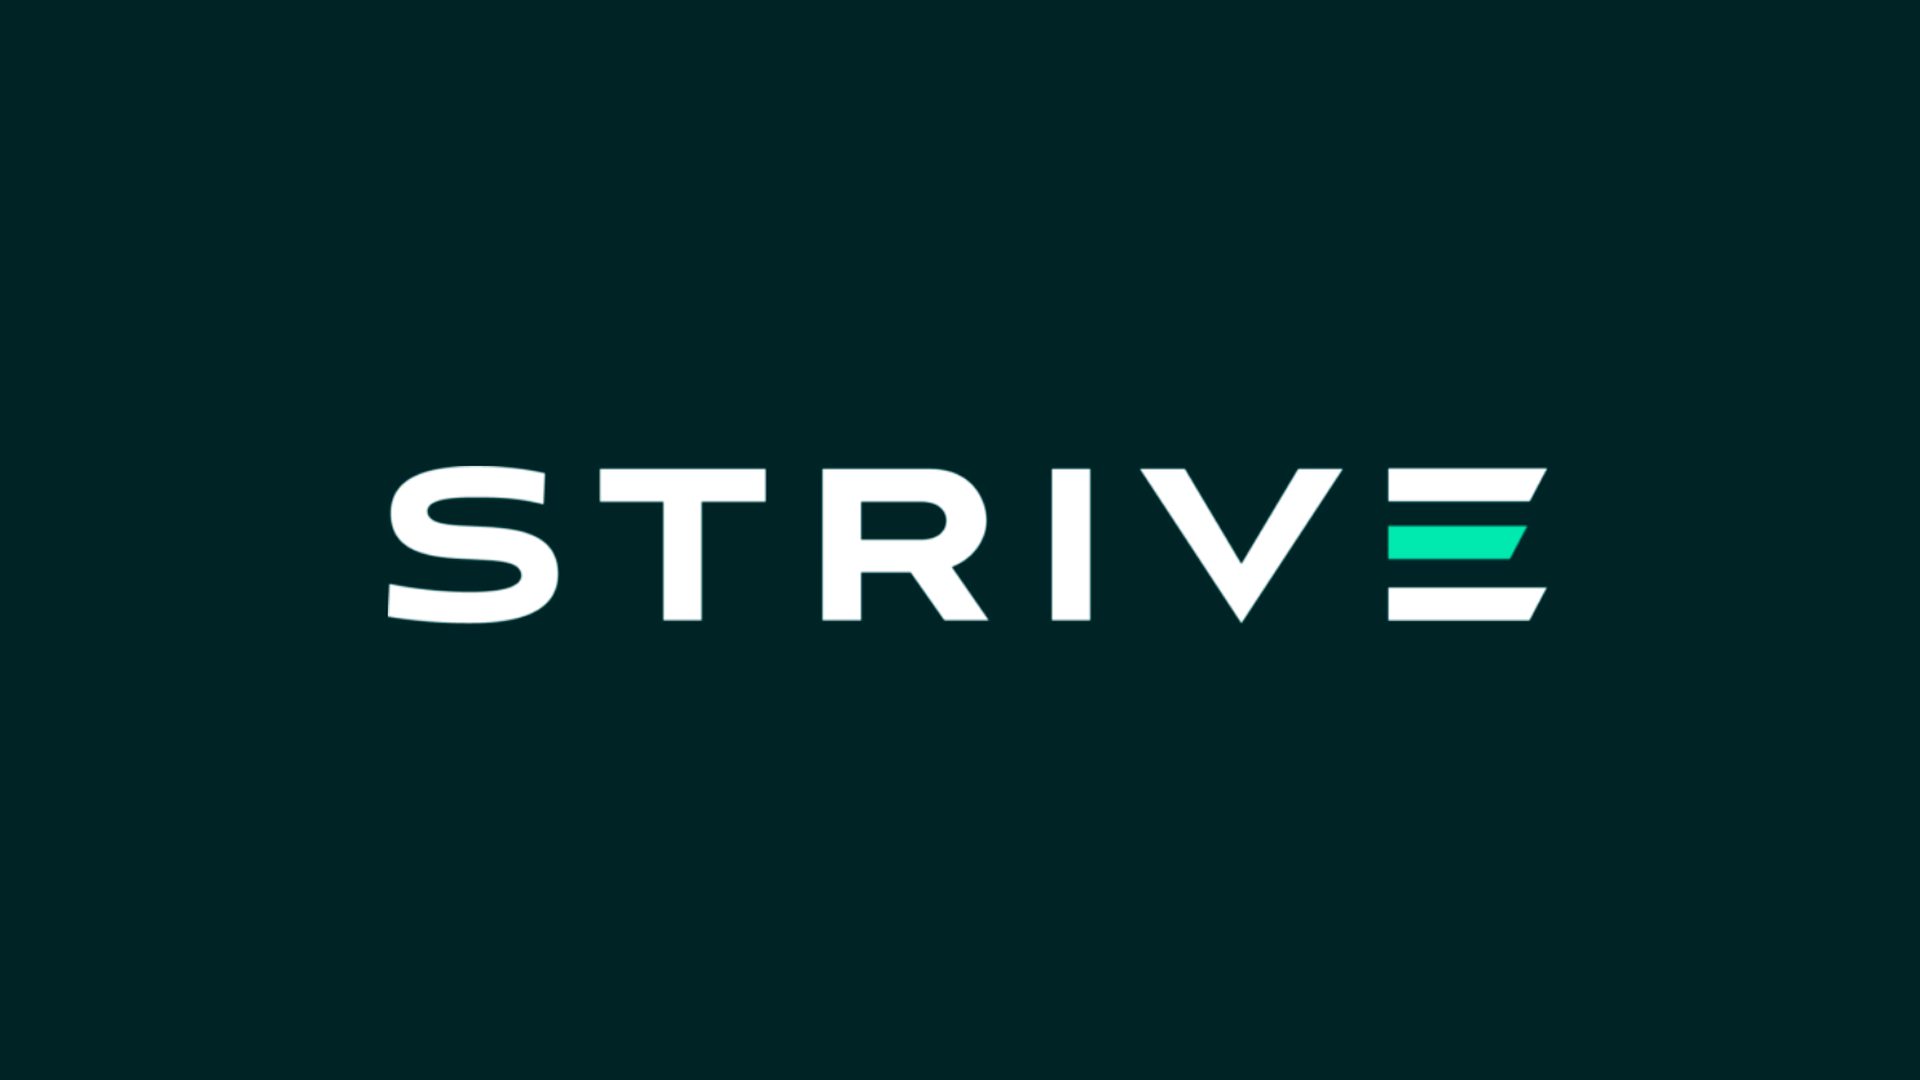 STRIVE Raises $30 Million in Series B Funding Round